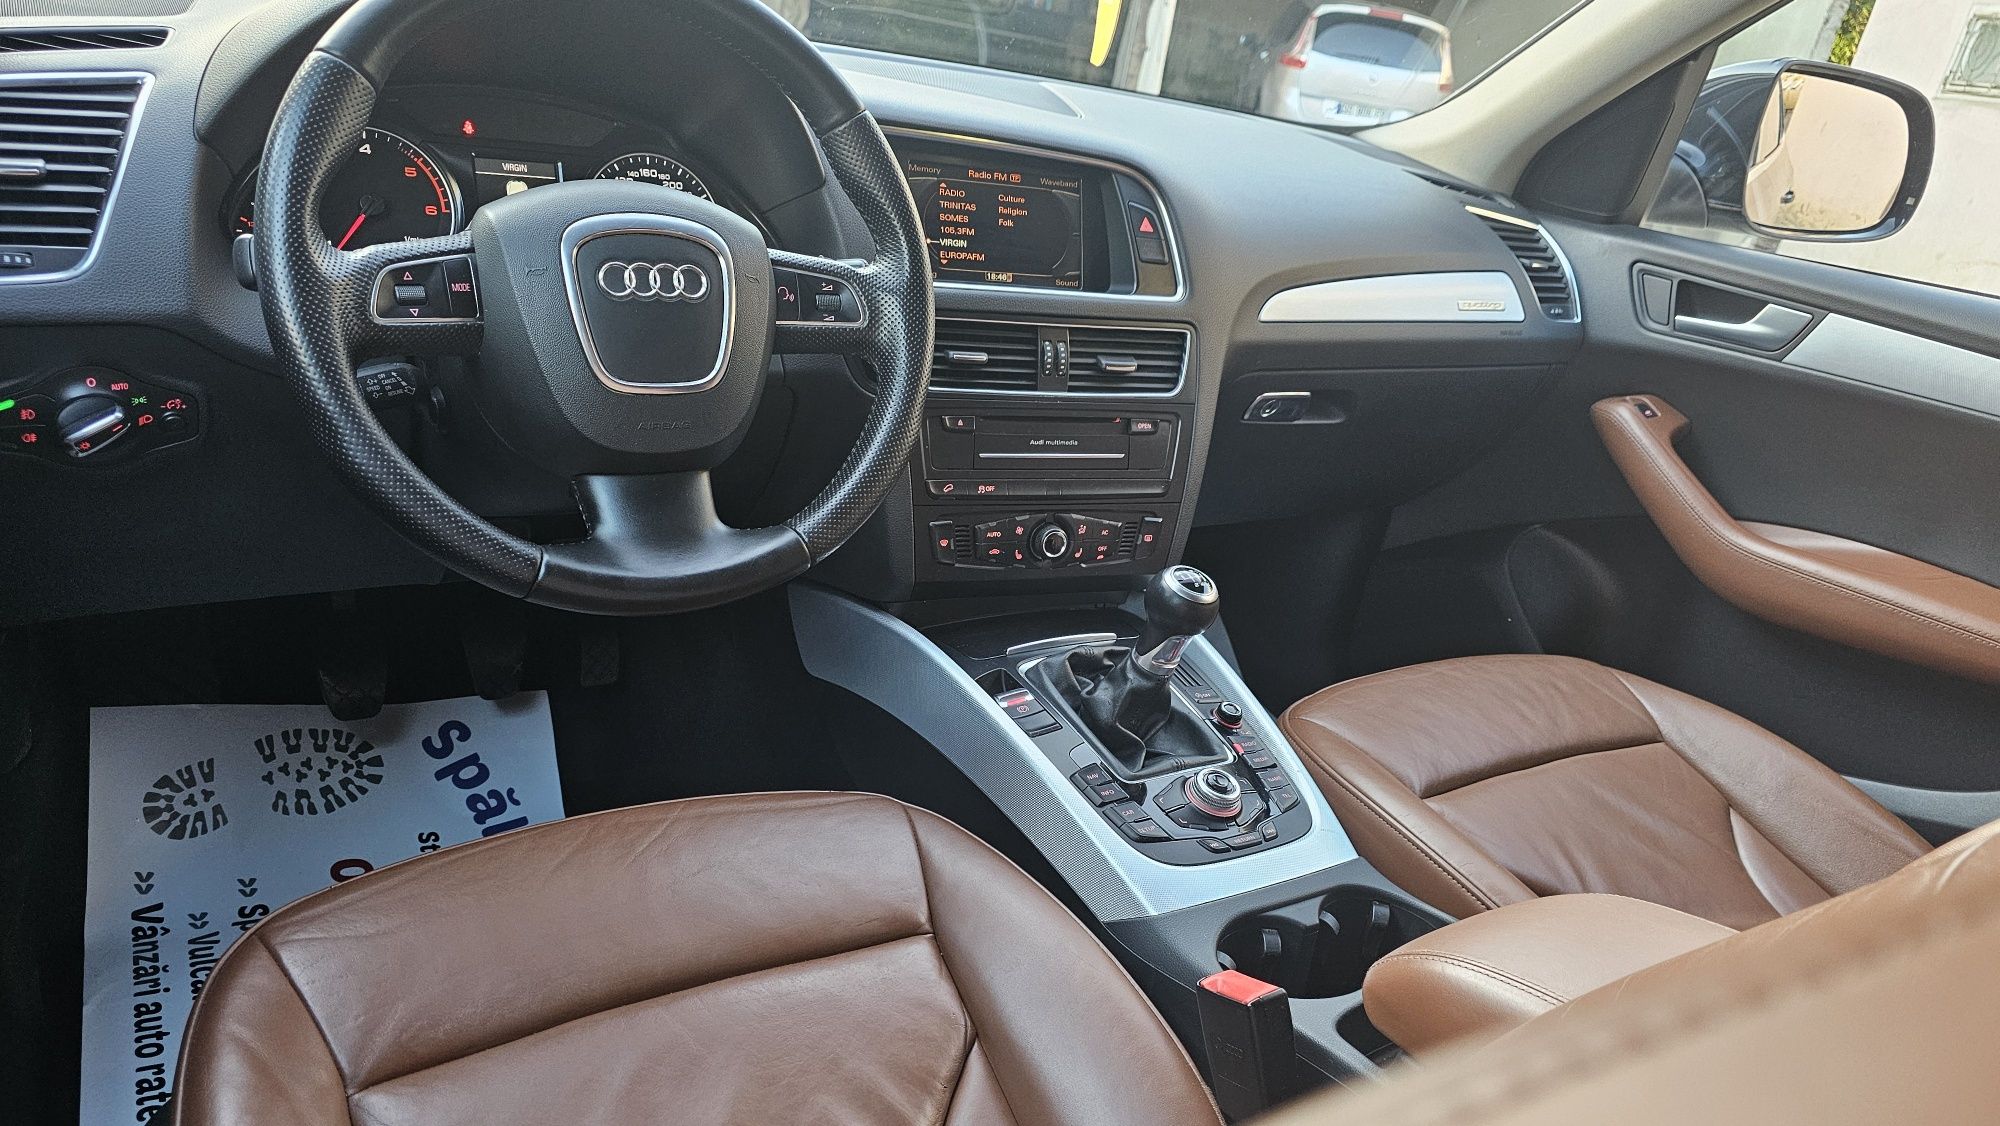 Audi Q5 2011 4x4 euro 5